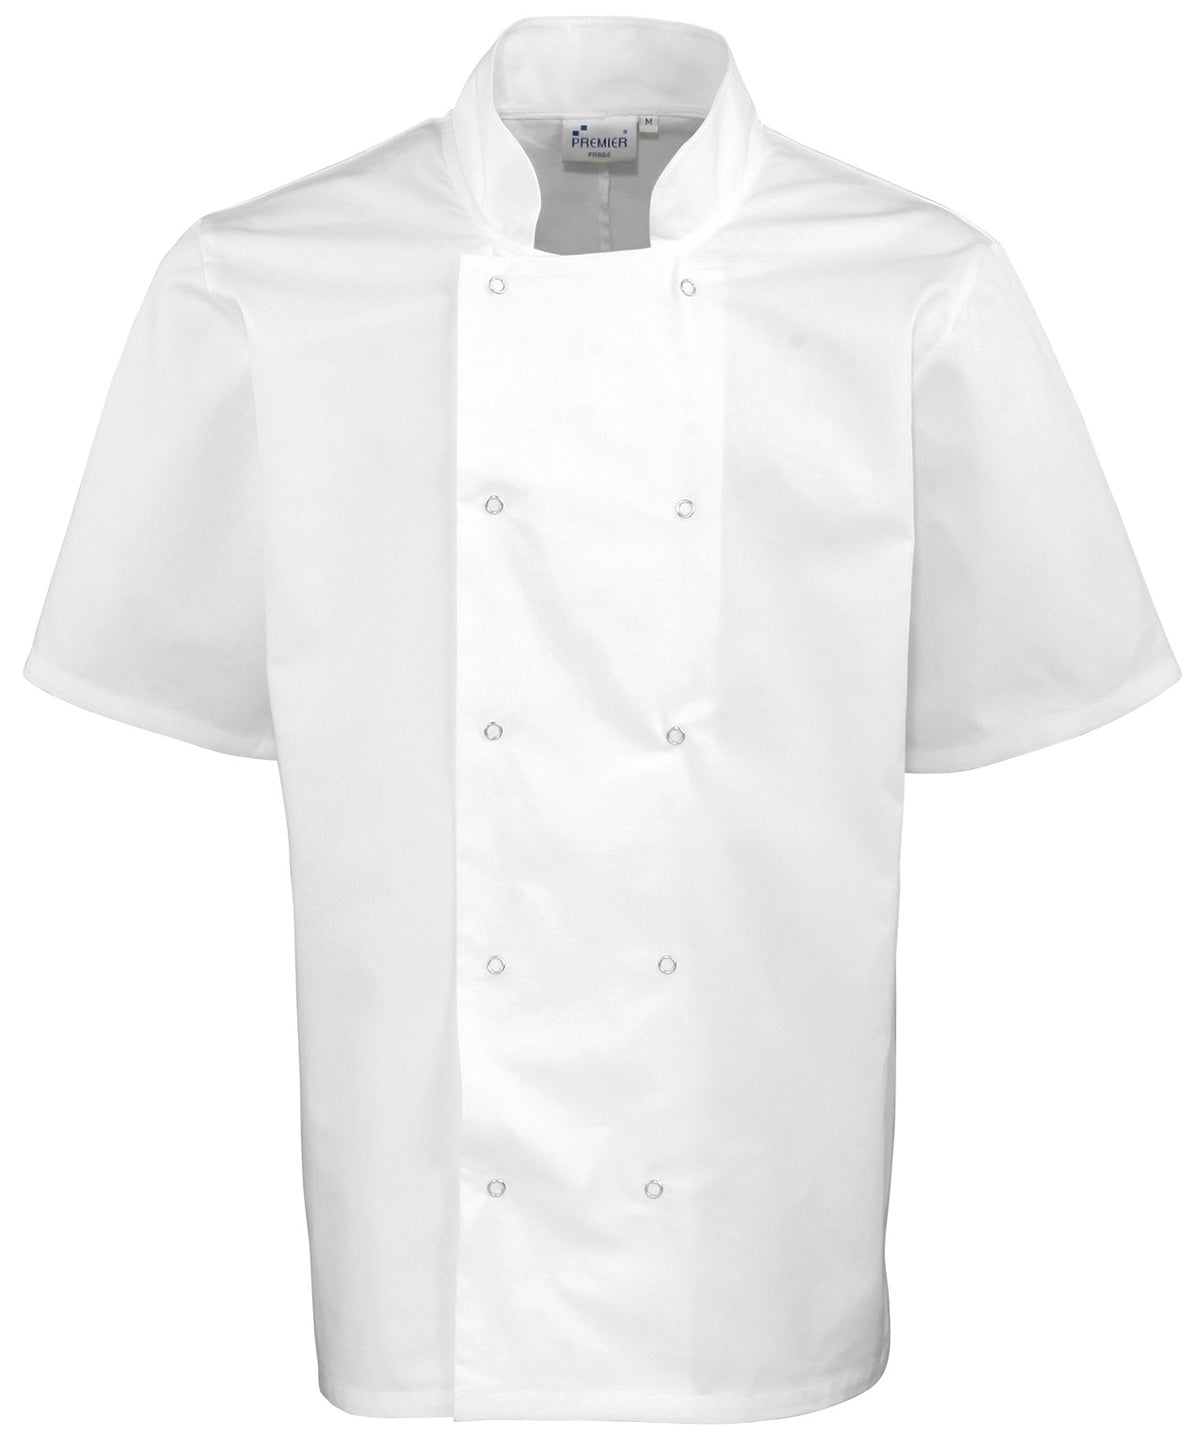 Premier PR664 Short Sleeve Chefs Jacket